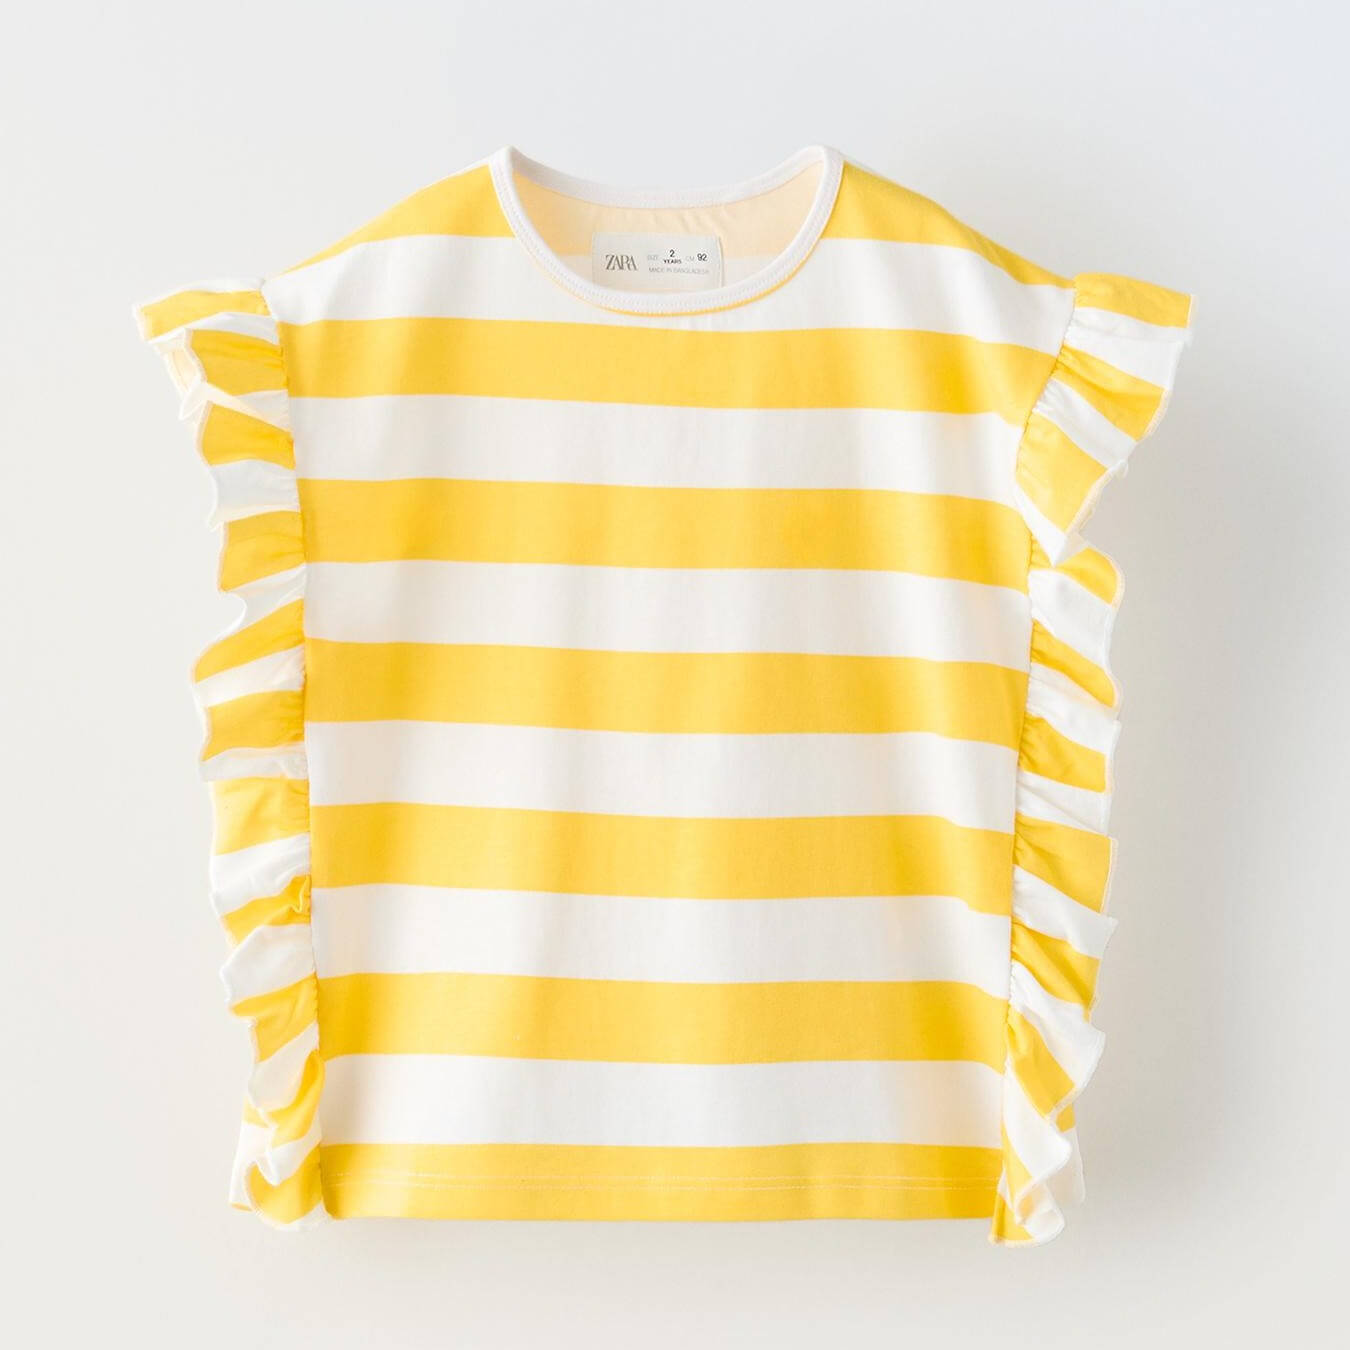 Футболка Zara Striped With Ruffle Trims, желтый/белый футболка zara striped with patch белый черный